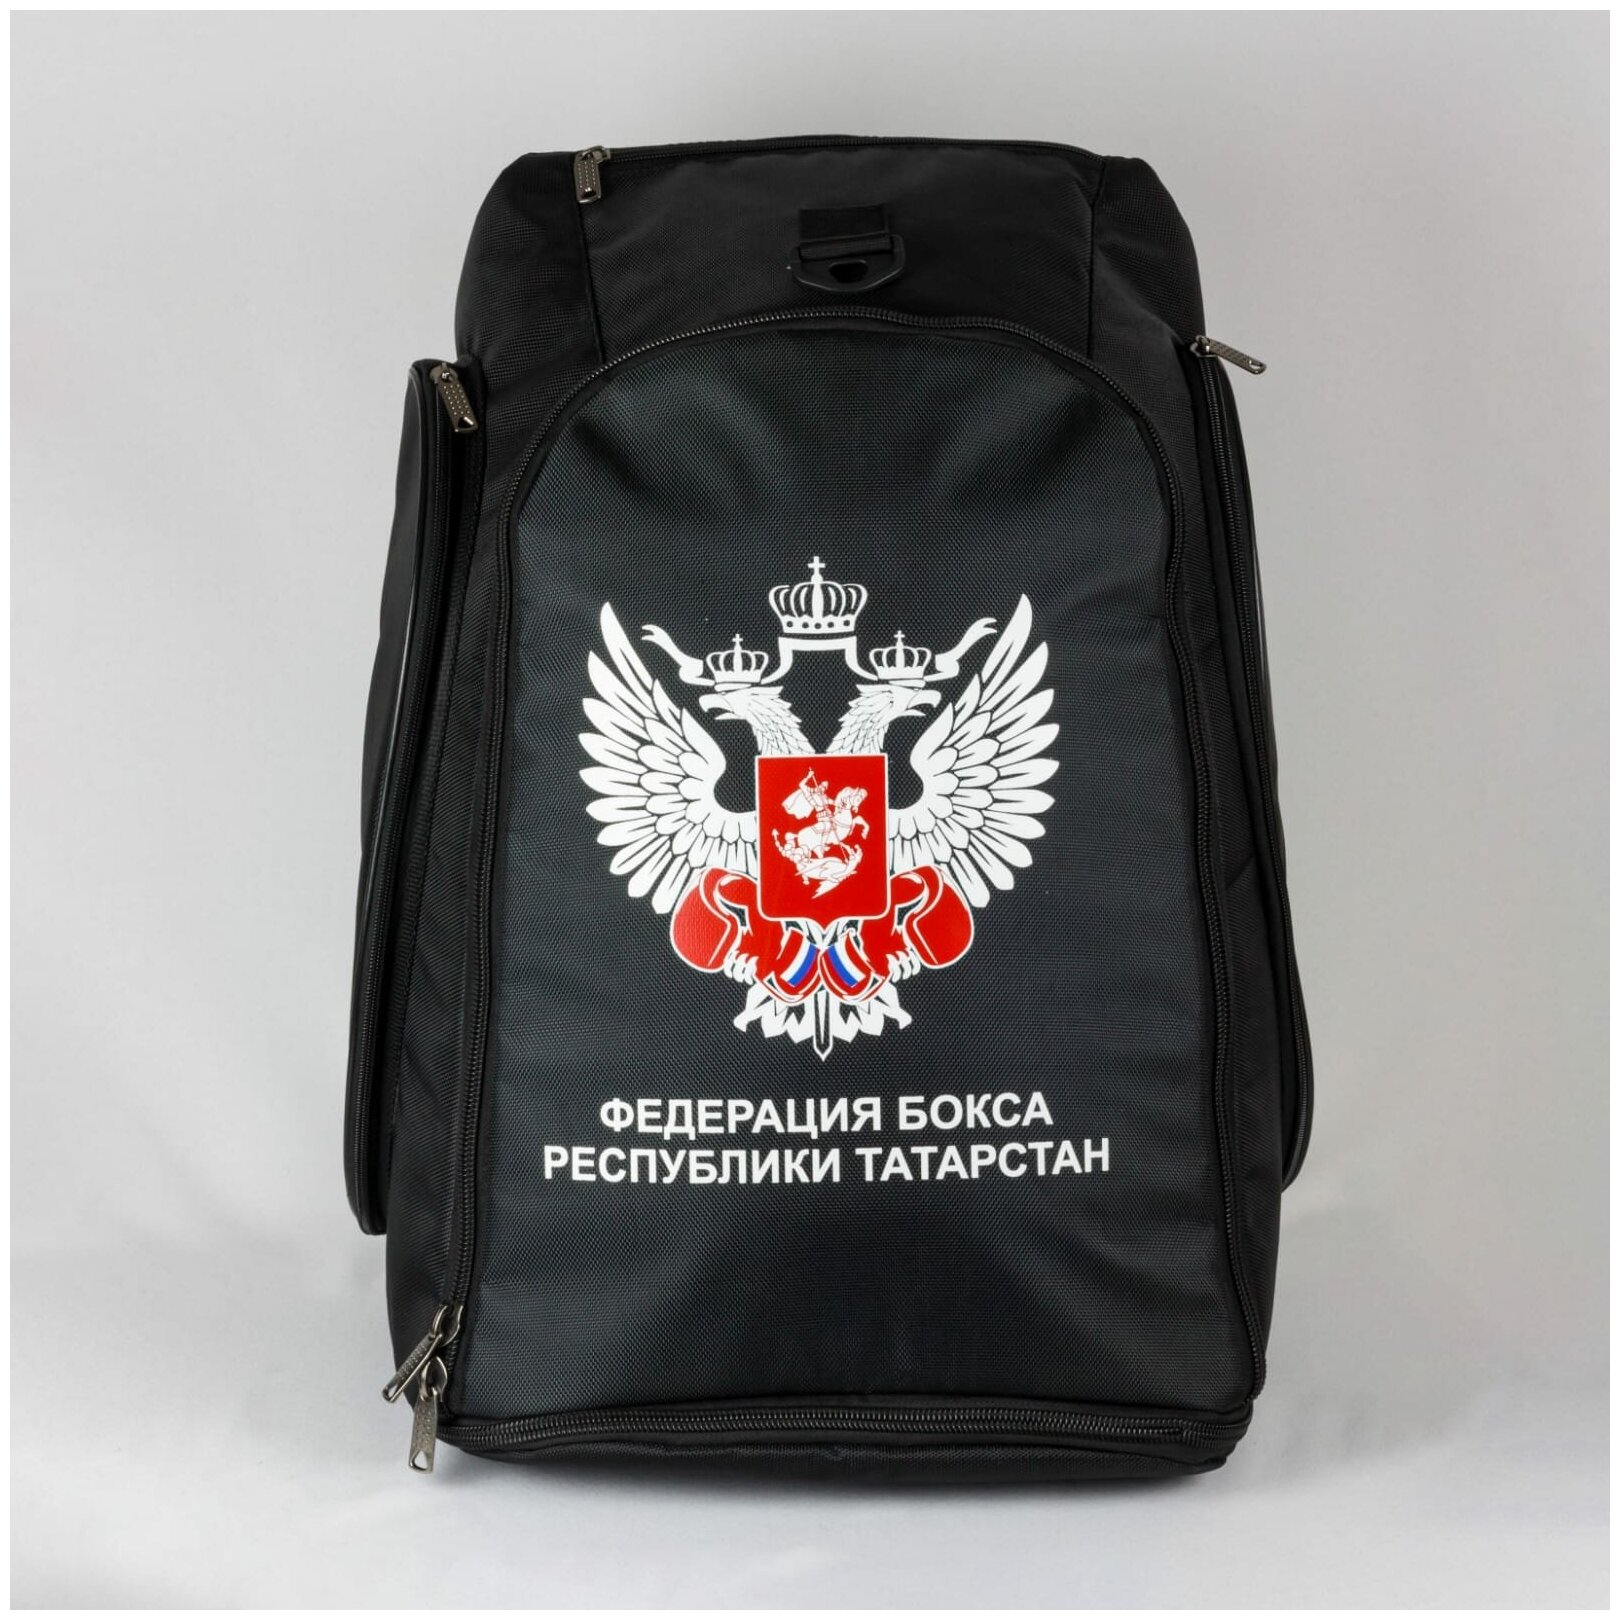 Рюкзак Puncher BAG-5 ФБ РТ черно белый - ФБ россия